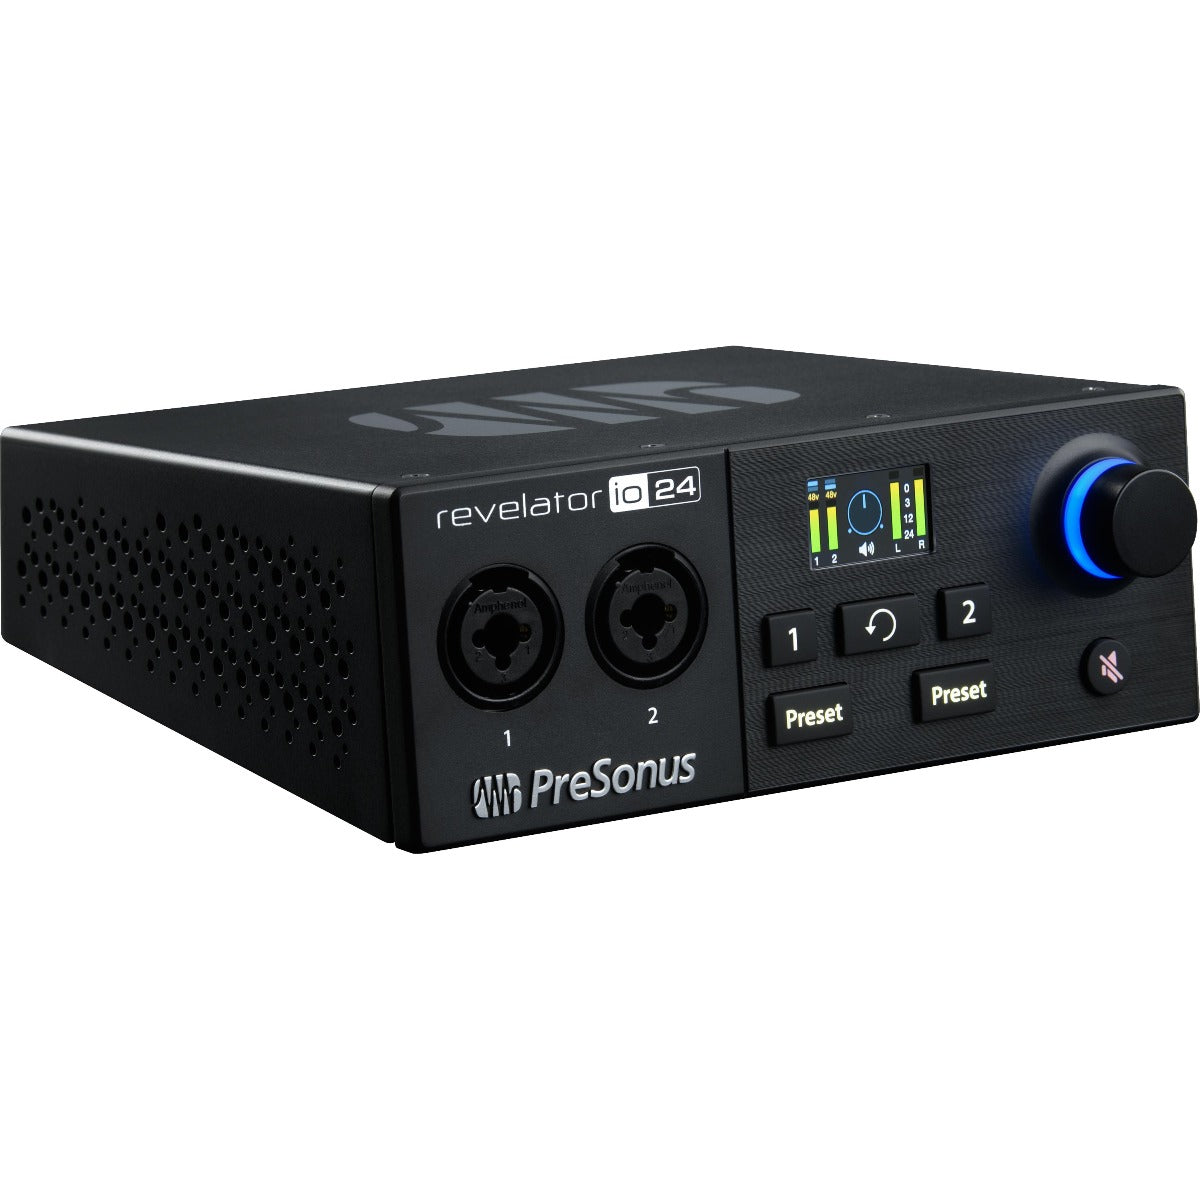 3/4 view of PreSonus Revelator io24 USB-C Audio & MIDI Interface showing front, left side and top